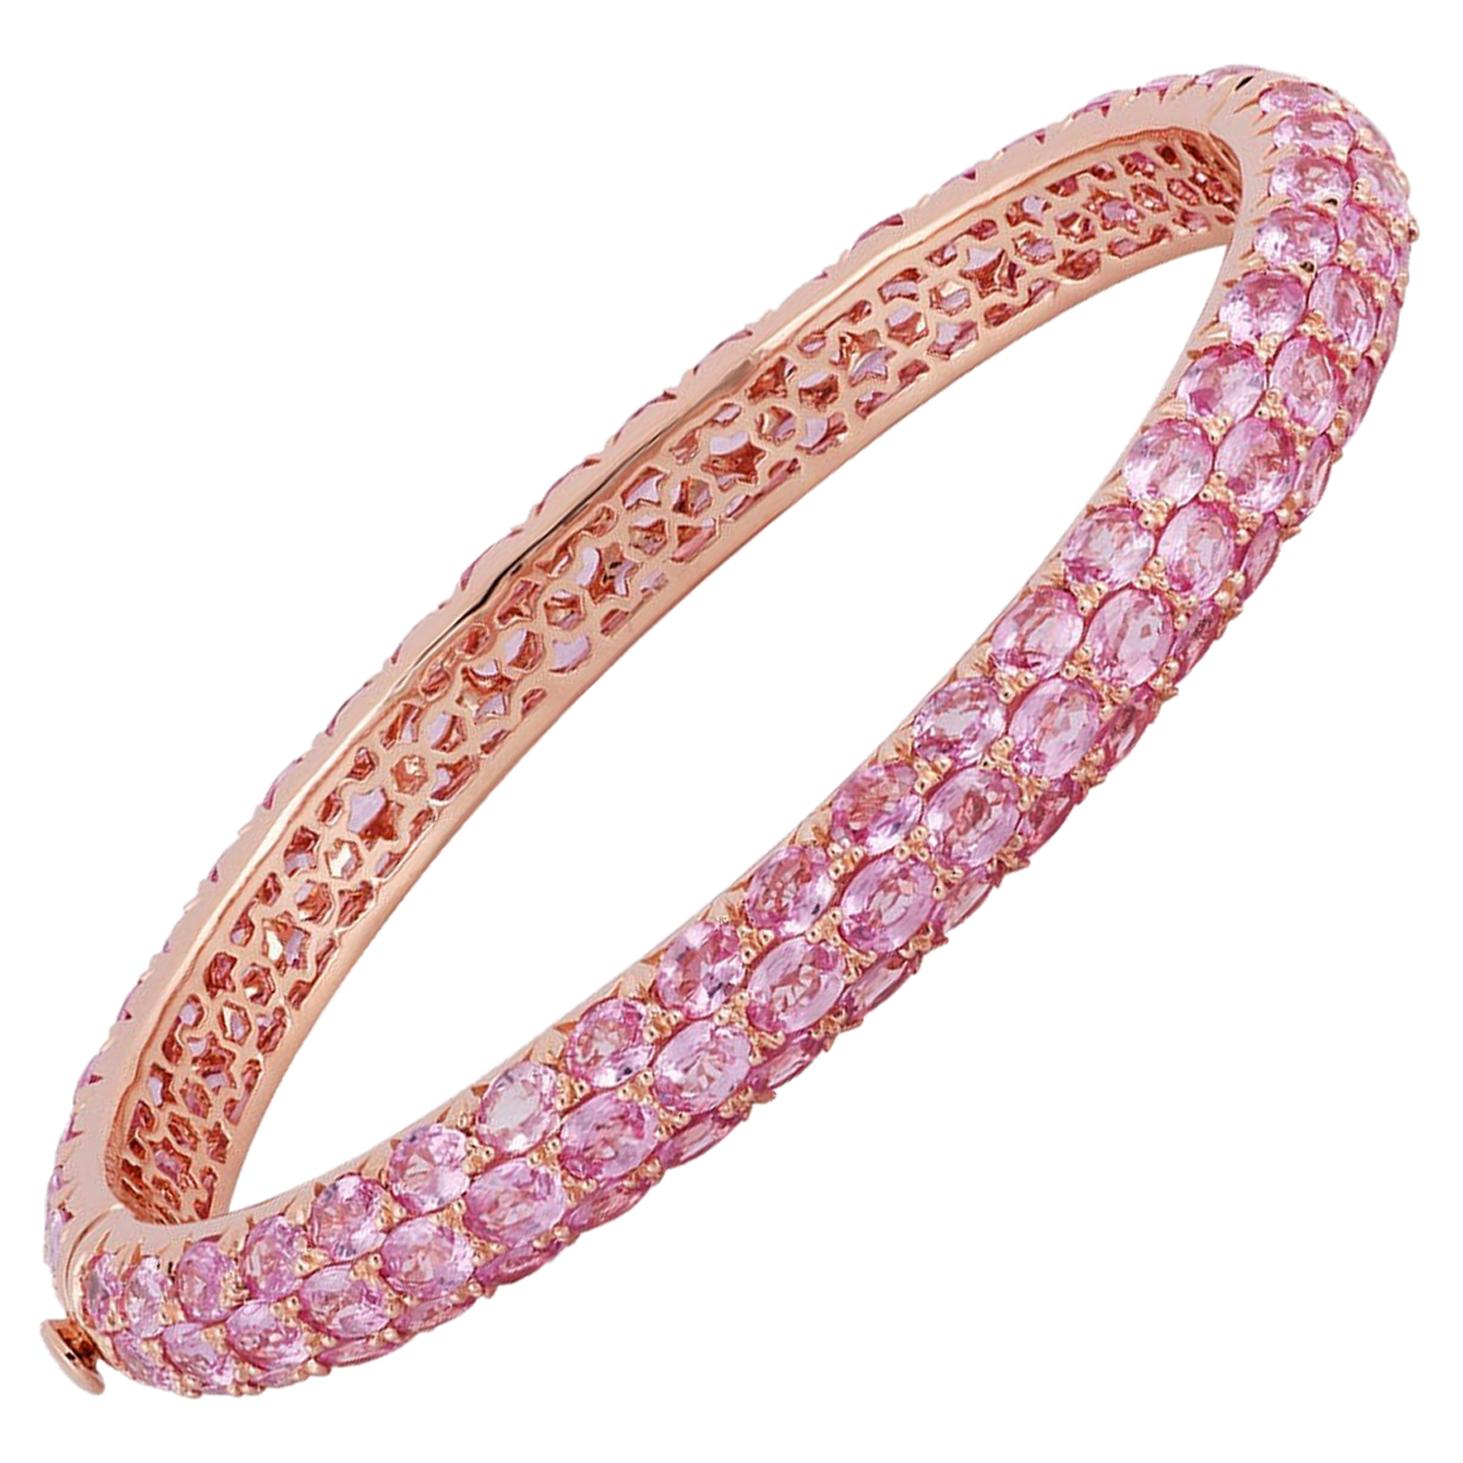 Elizabeth Locke Faceted Pink Sapphire and Diamond Bangle Bracelet